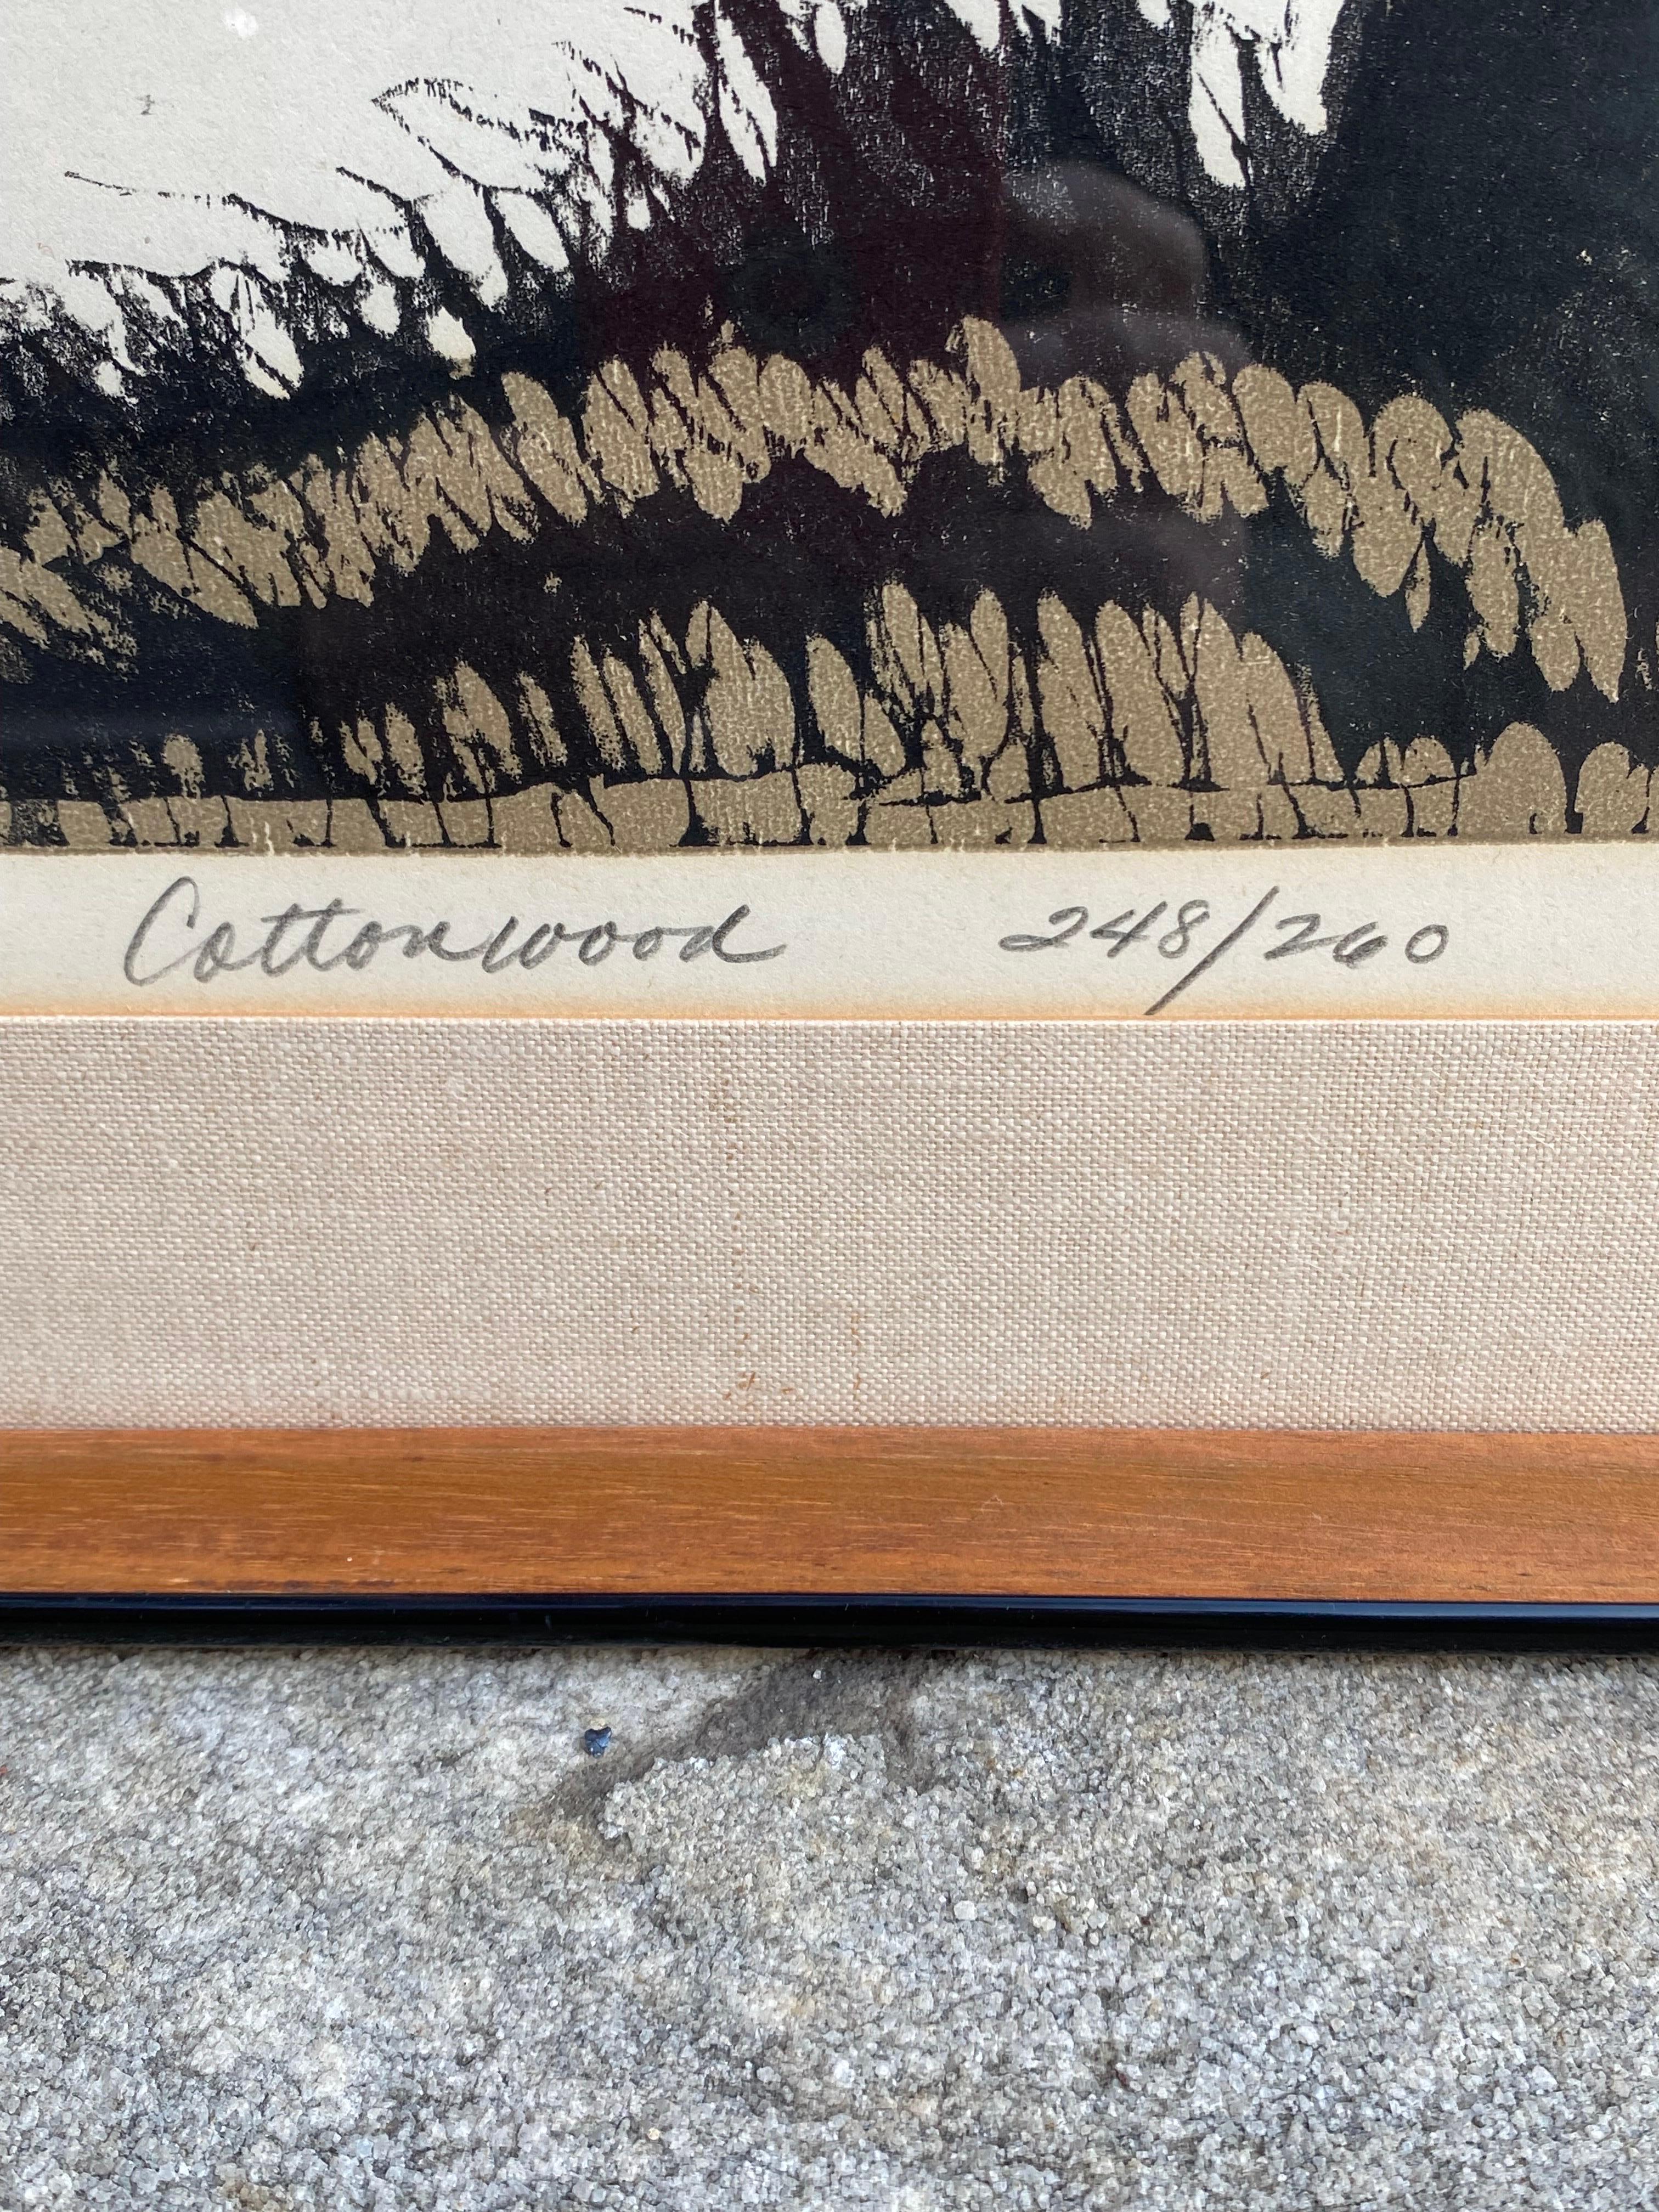 Joe Ardourel Cottonwoods Litho 248/ 260 In Good Condition For Sale In Philadelphia, PA